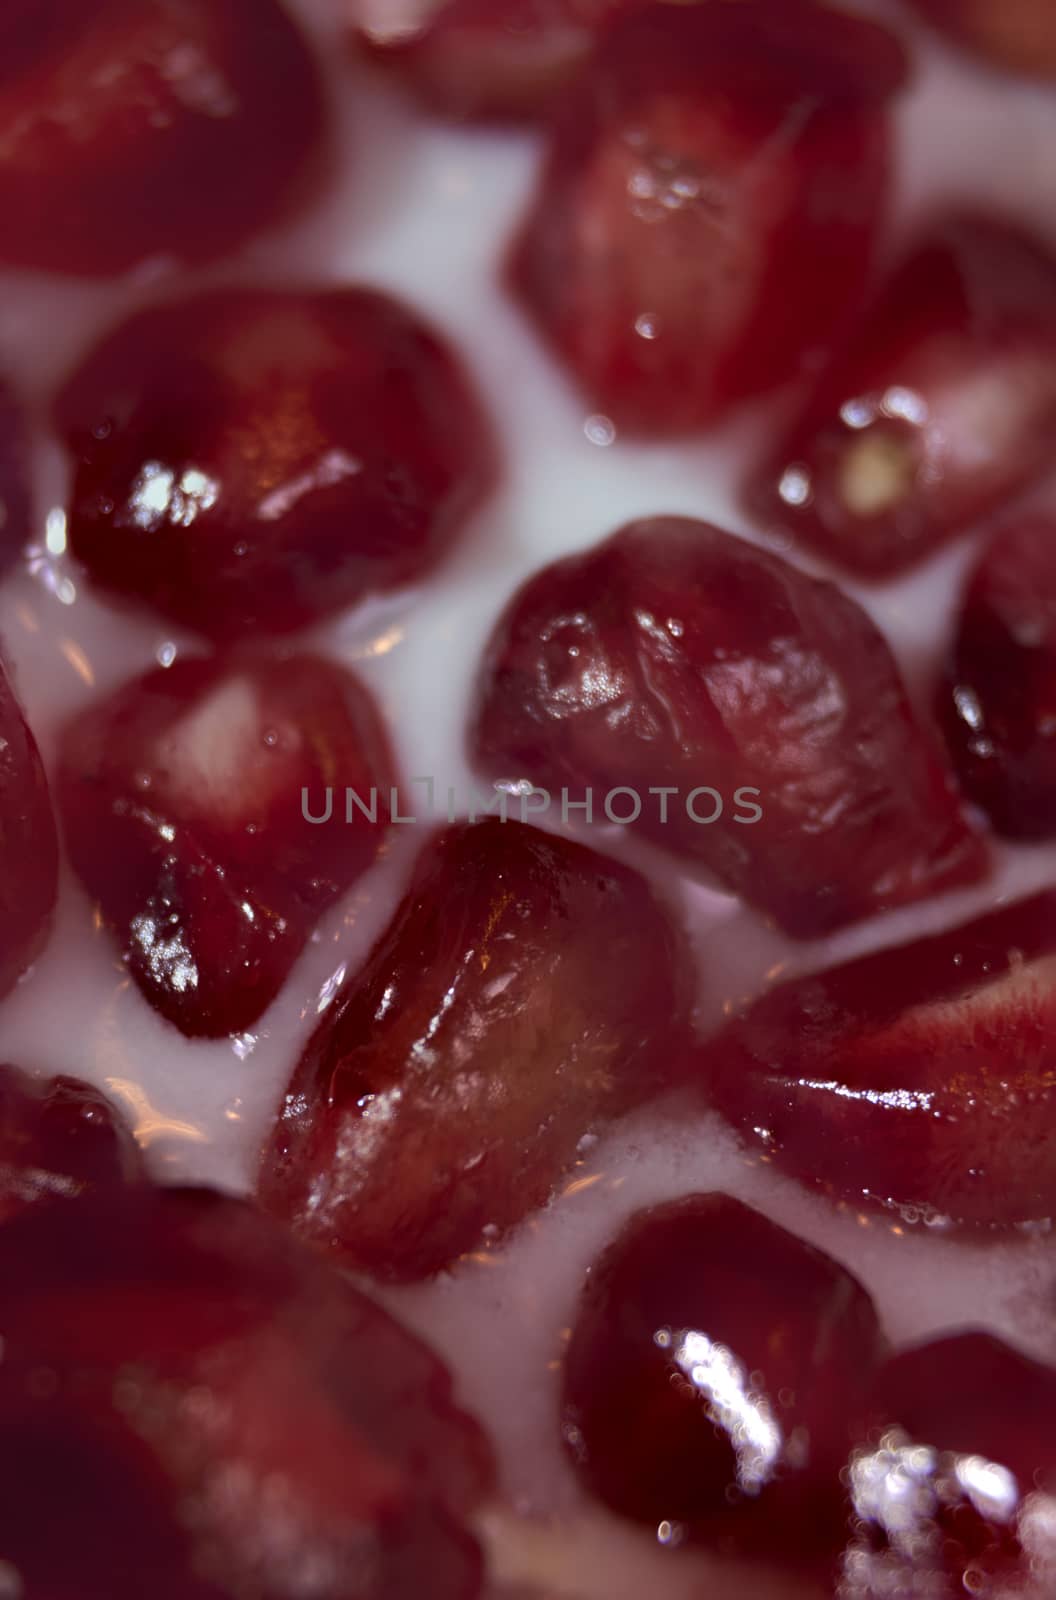 Pomegranate seeds close-up with yogurt, macro photography